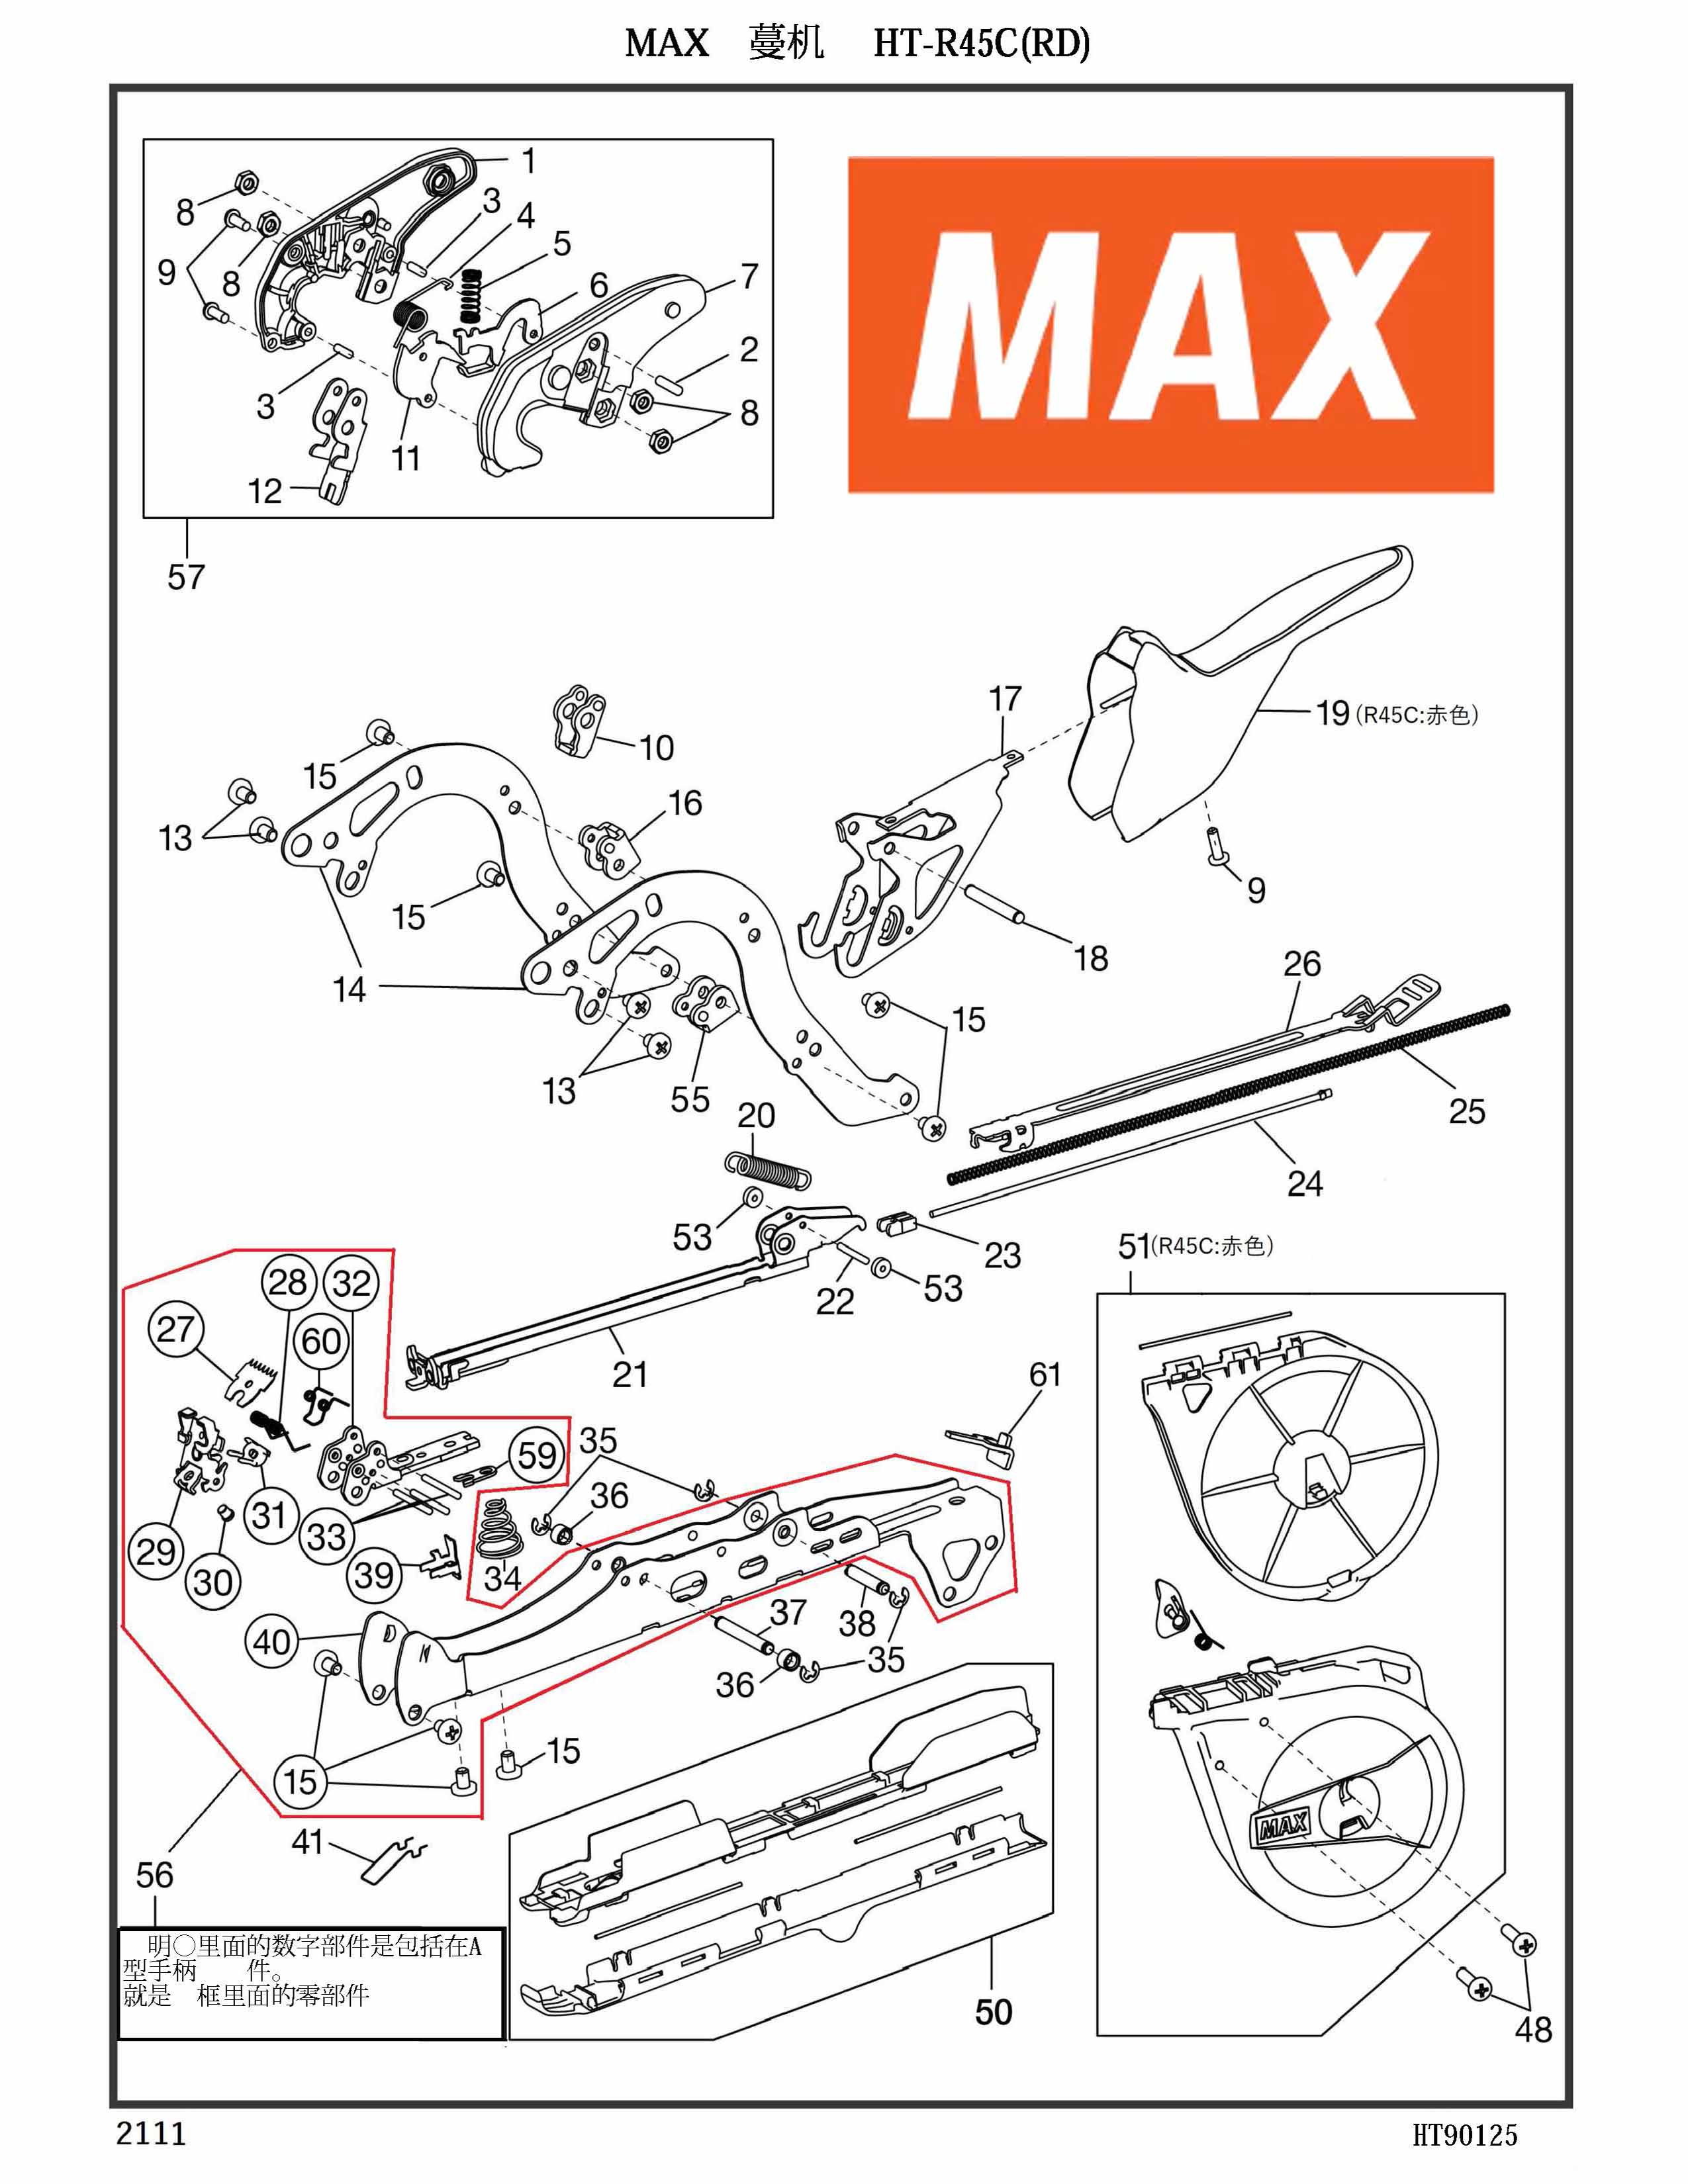 MAX Tapener Part HT11754 DRIVER (R45C) Fits MAX HT-R45L(O) R45C(RD) HT-R1 HT-R2 #39